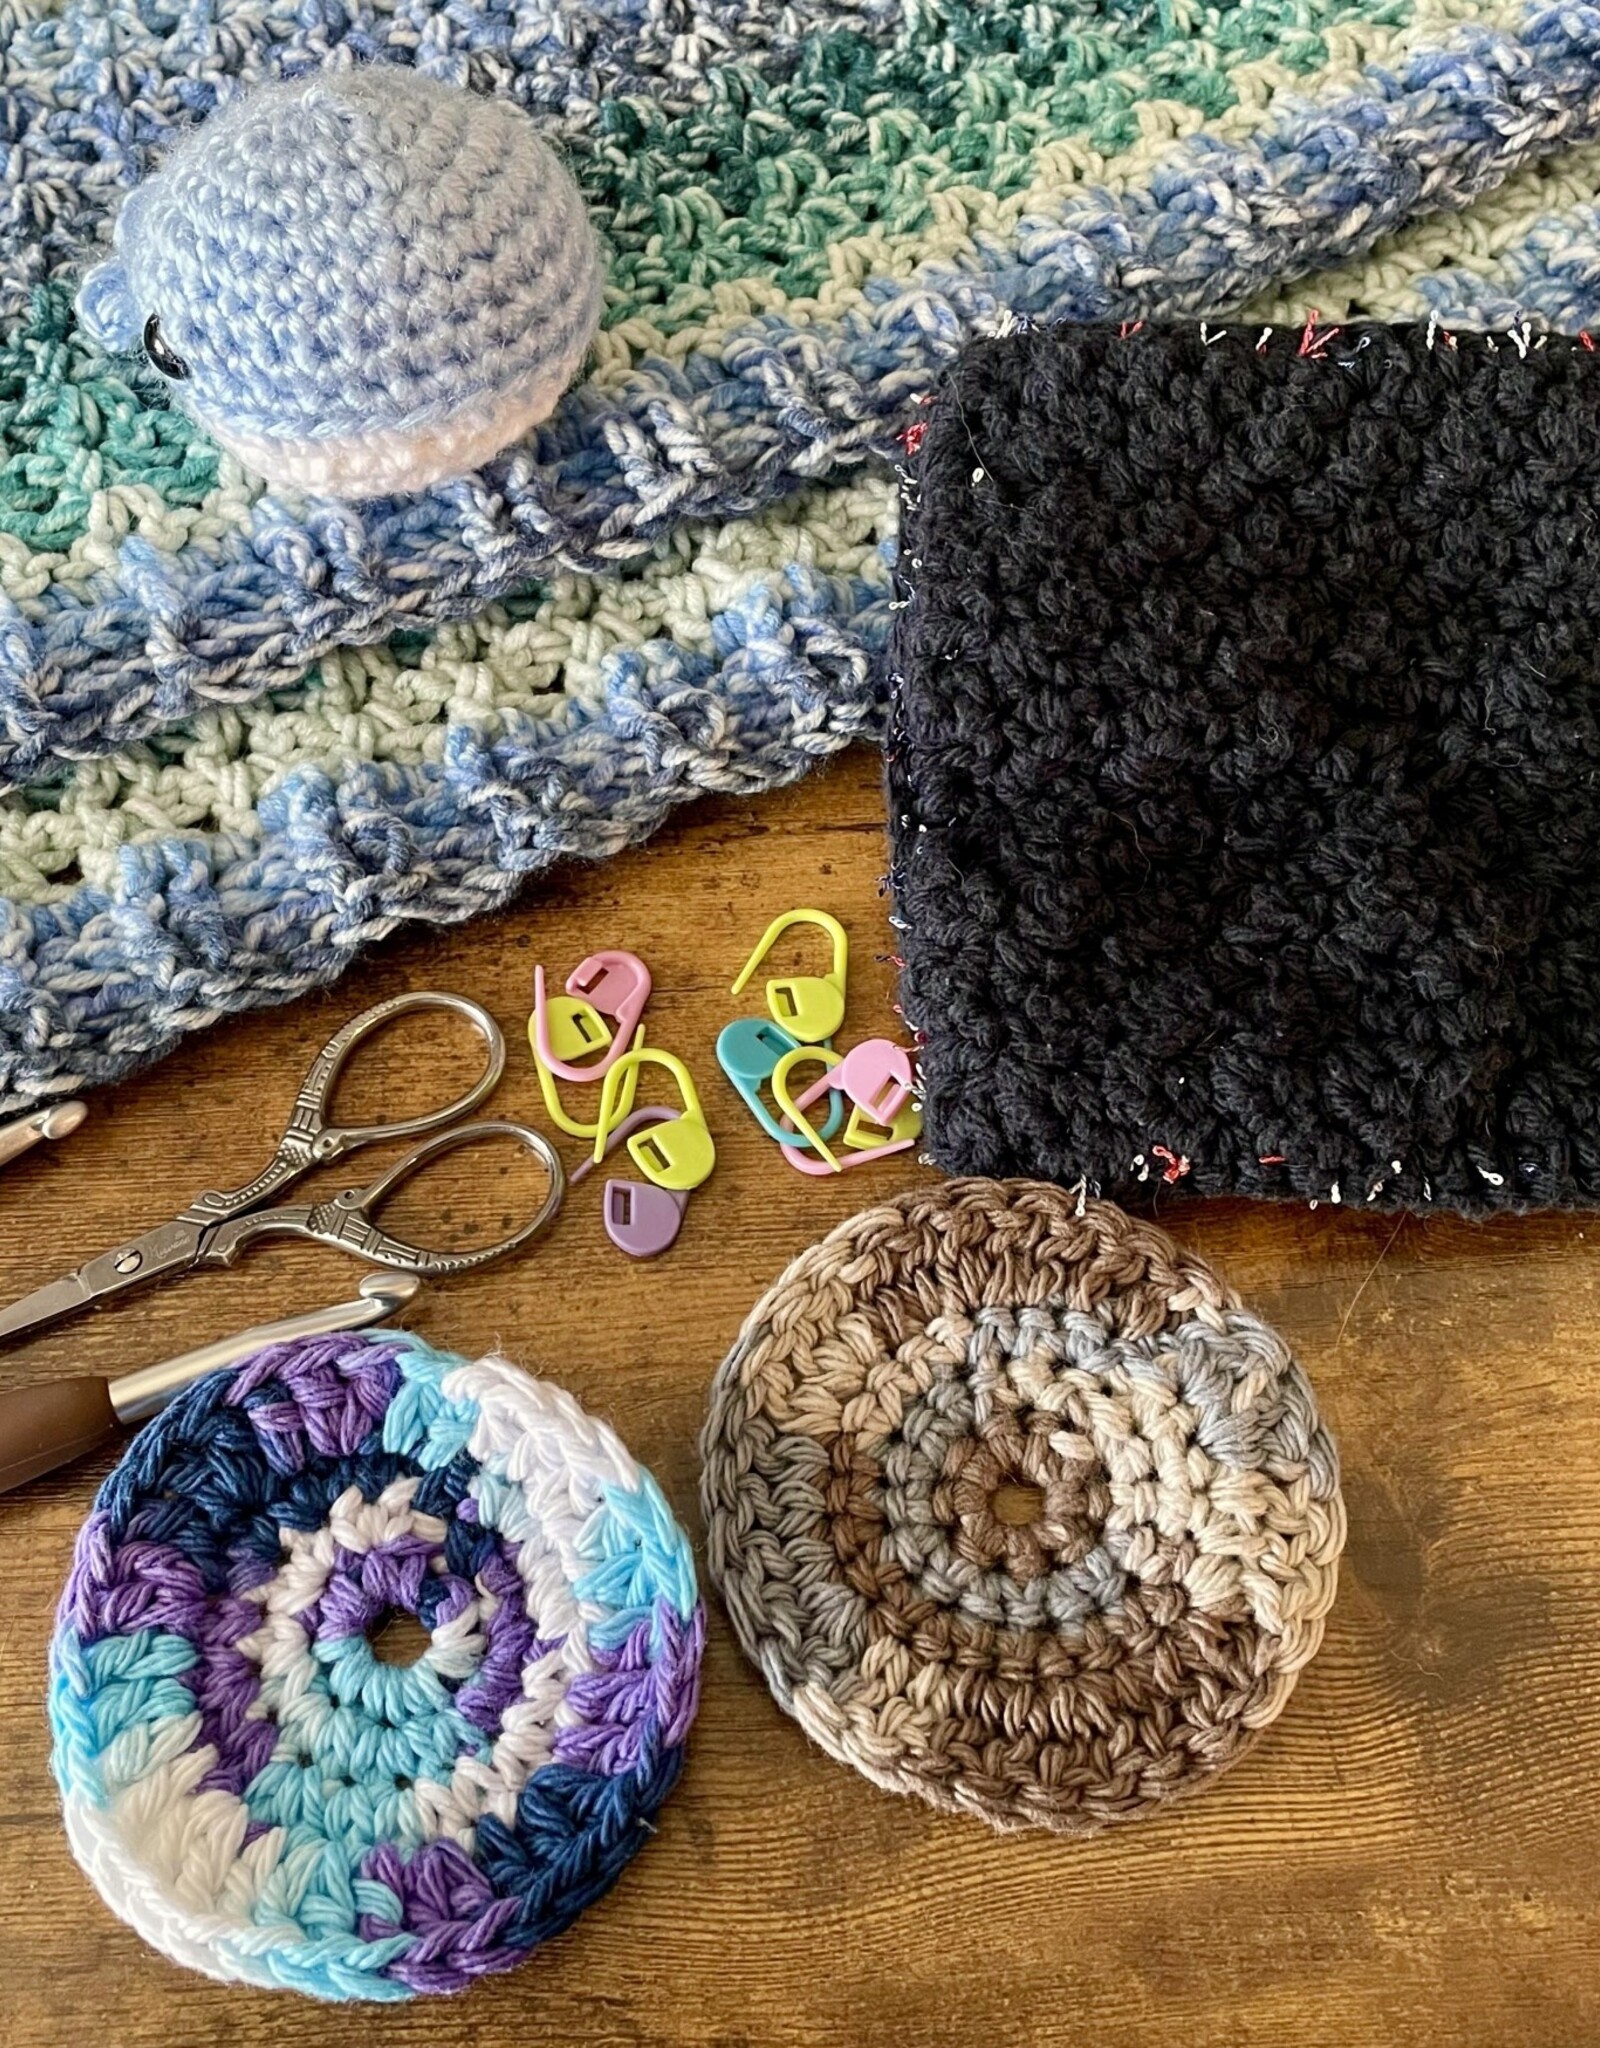 Crochet 101 - Thursdays, May 9 & 16, 5-7pm